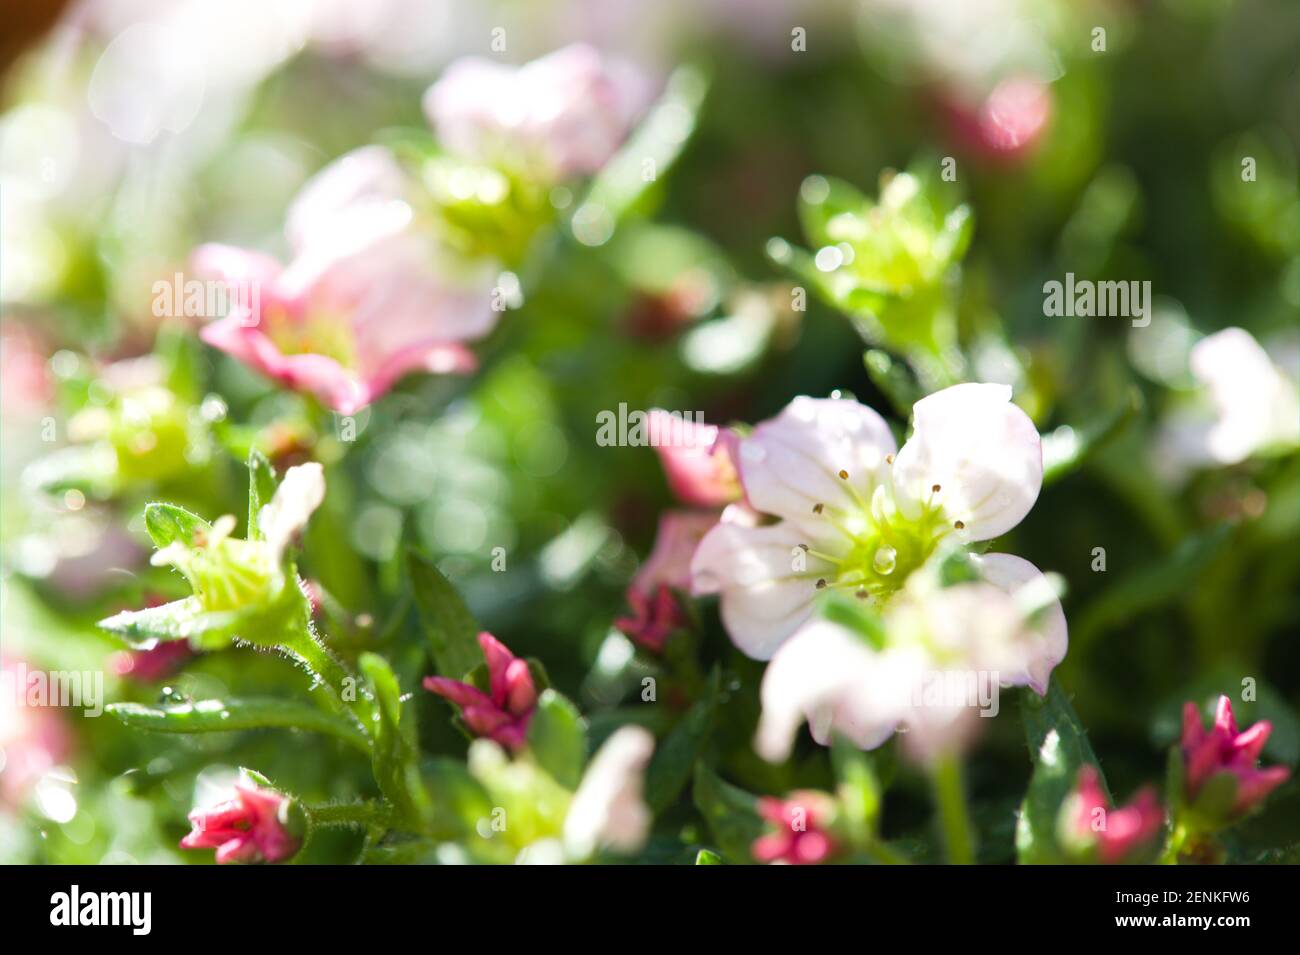 Alpine Gardening - Close-up of Fresh Delicate Star-shaped White & Pink Saxifraga arendsii Stock Photo